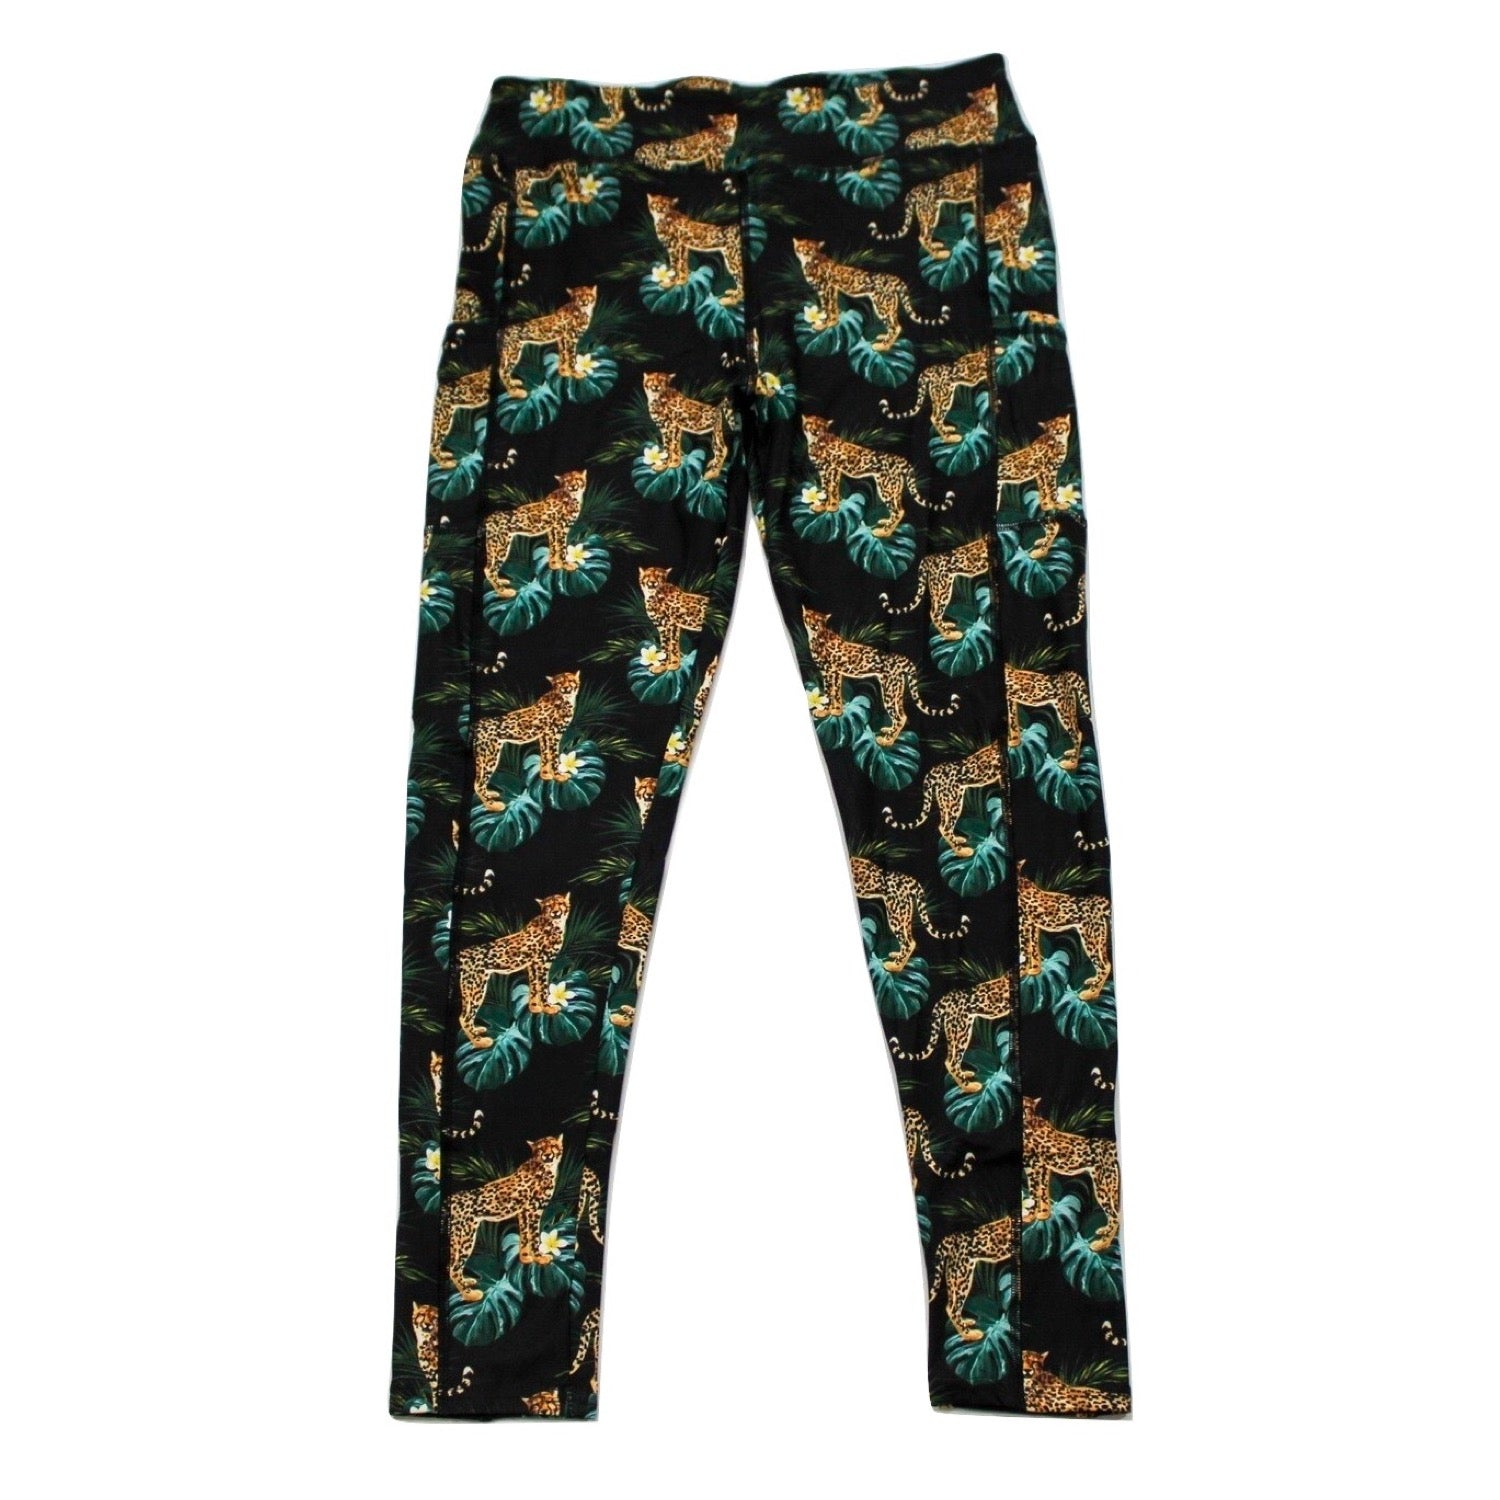 Cheetahtude full length legging with pockets